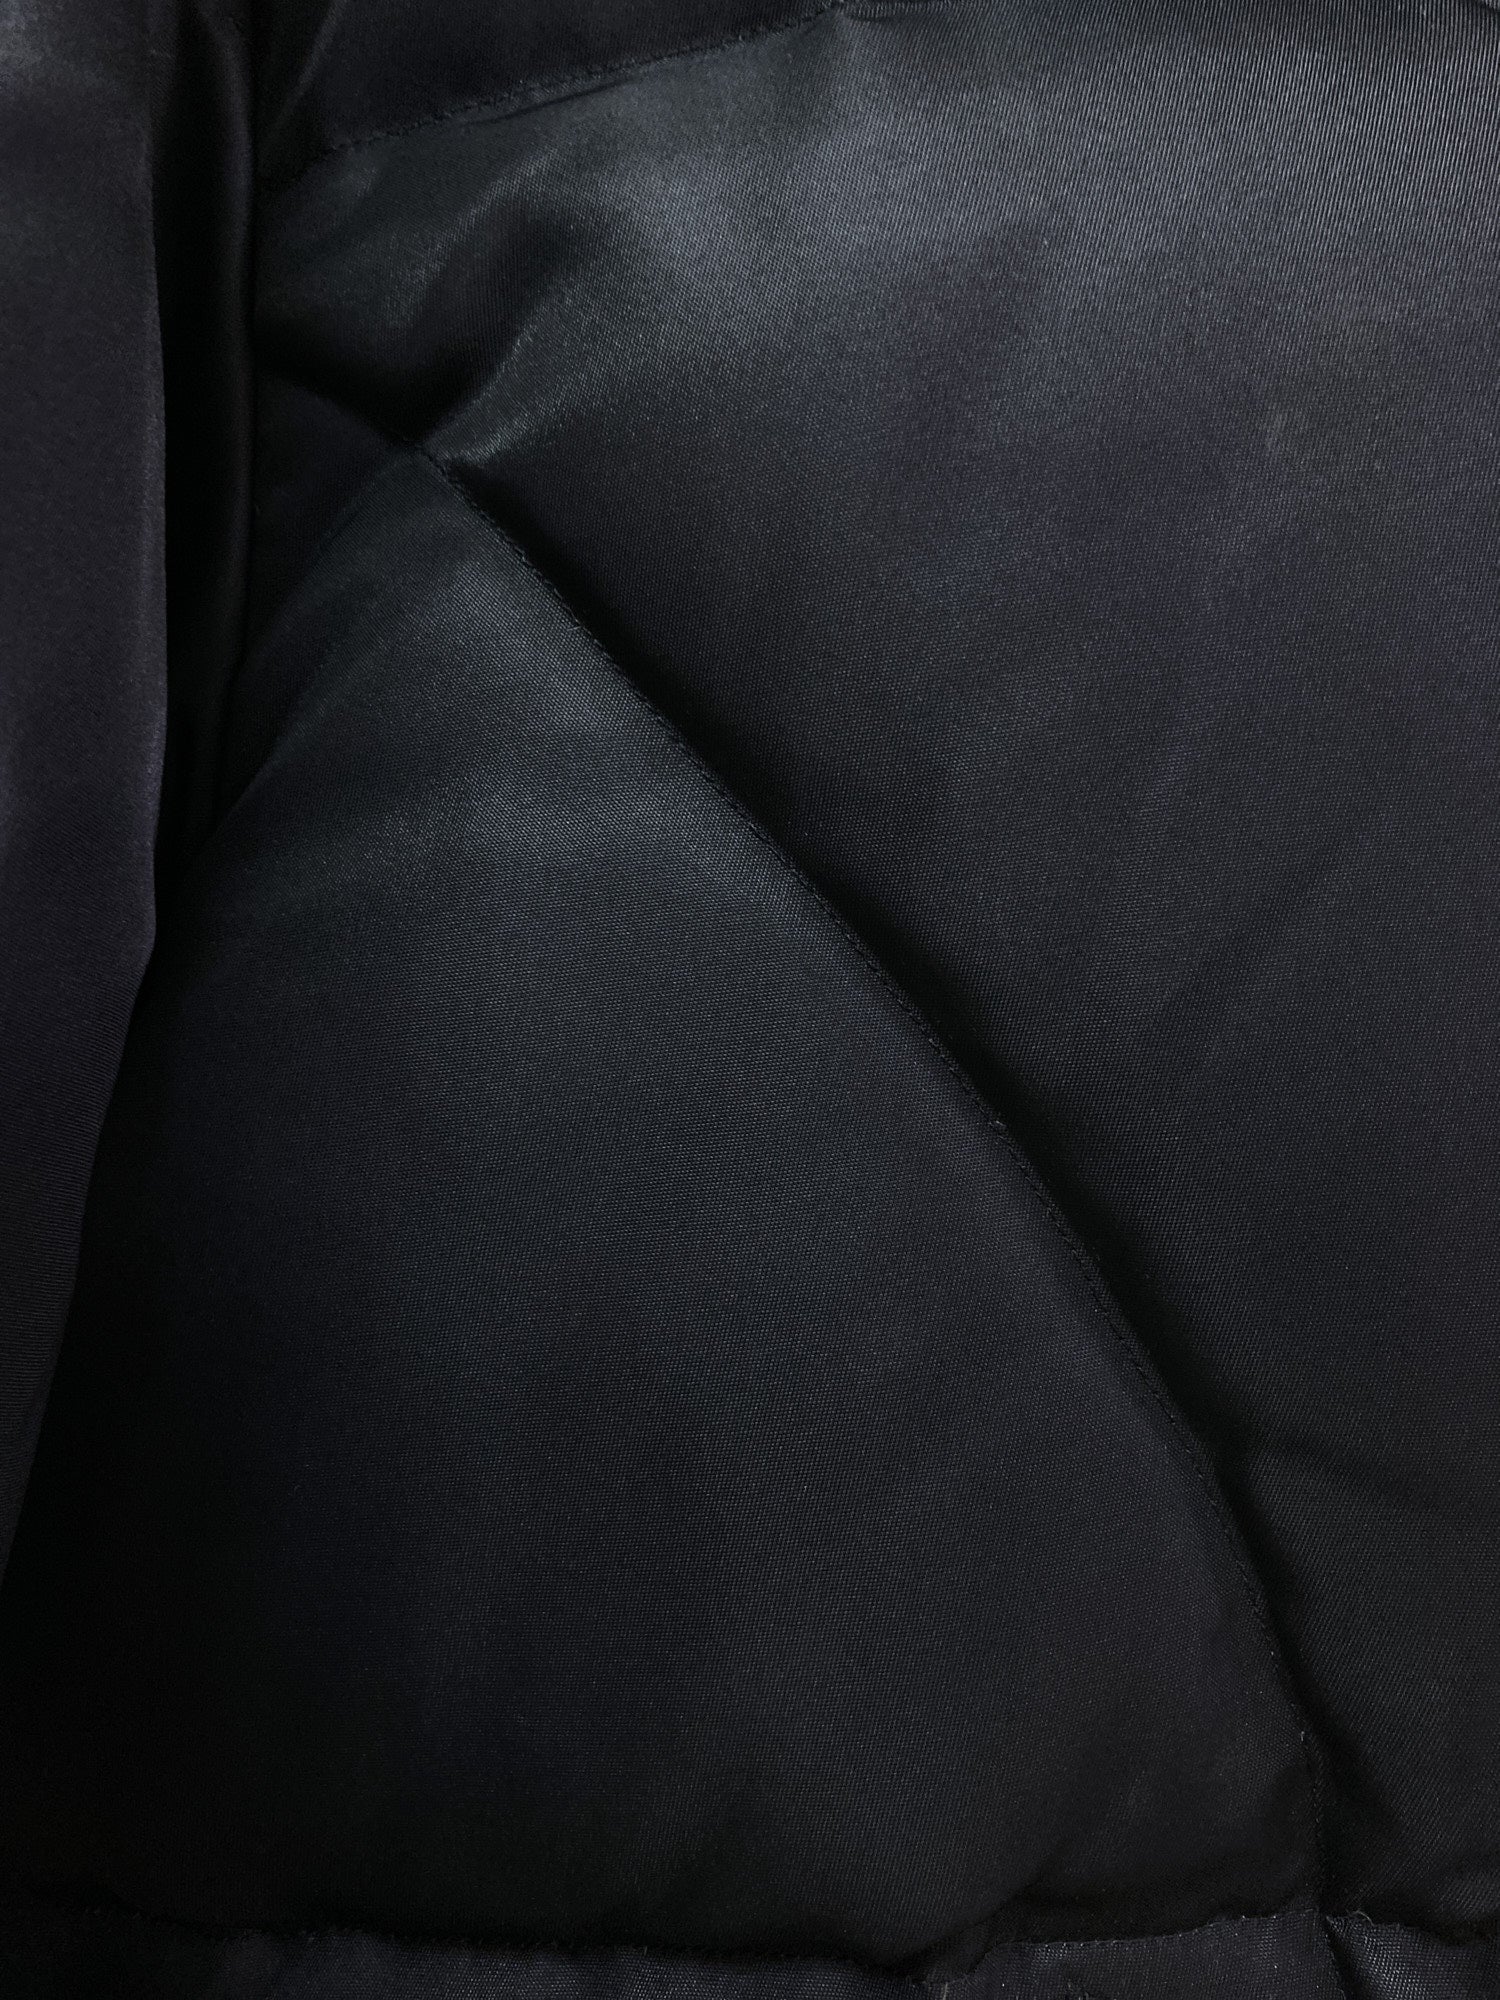 Kenzo Homme 1990s black nylon high neck down jacket - M L